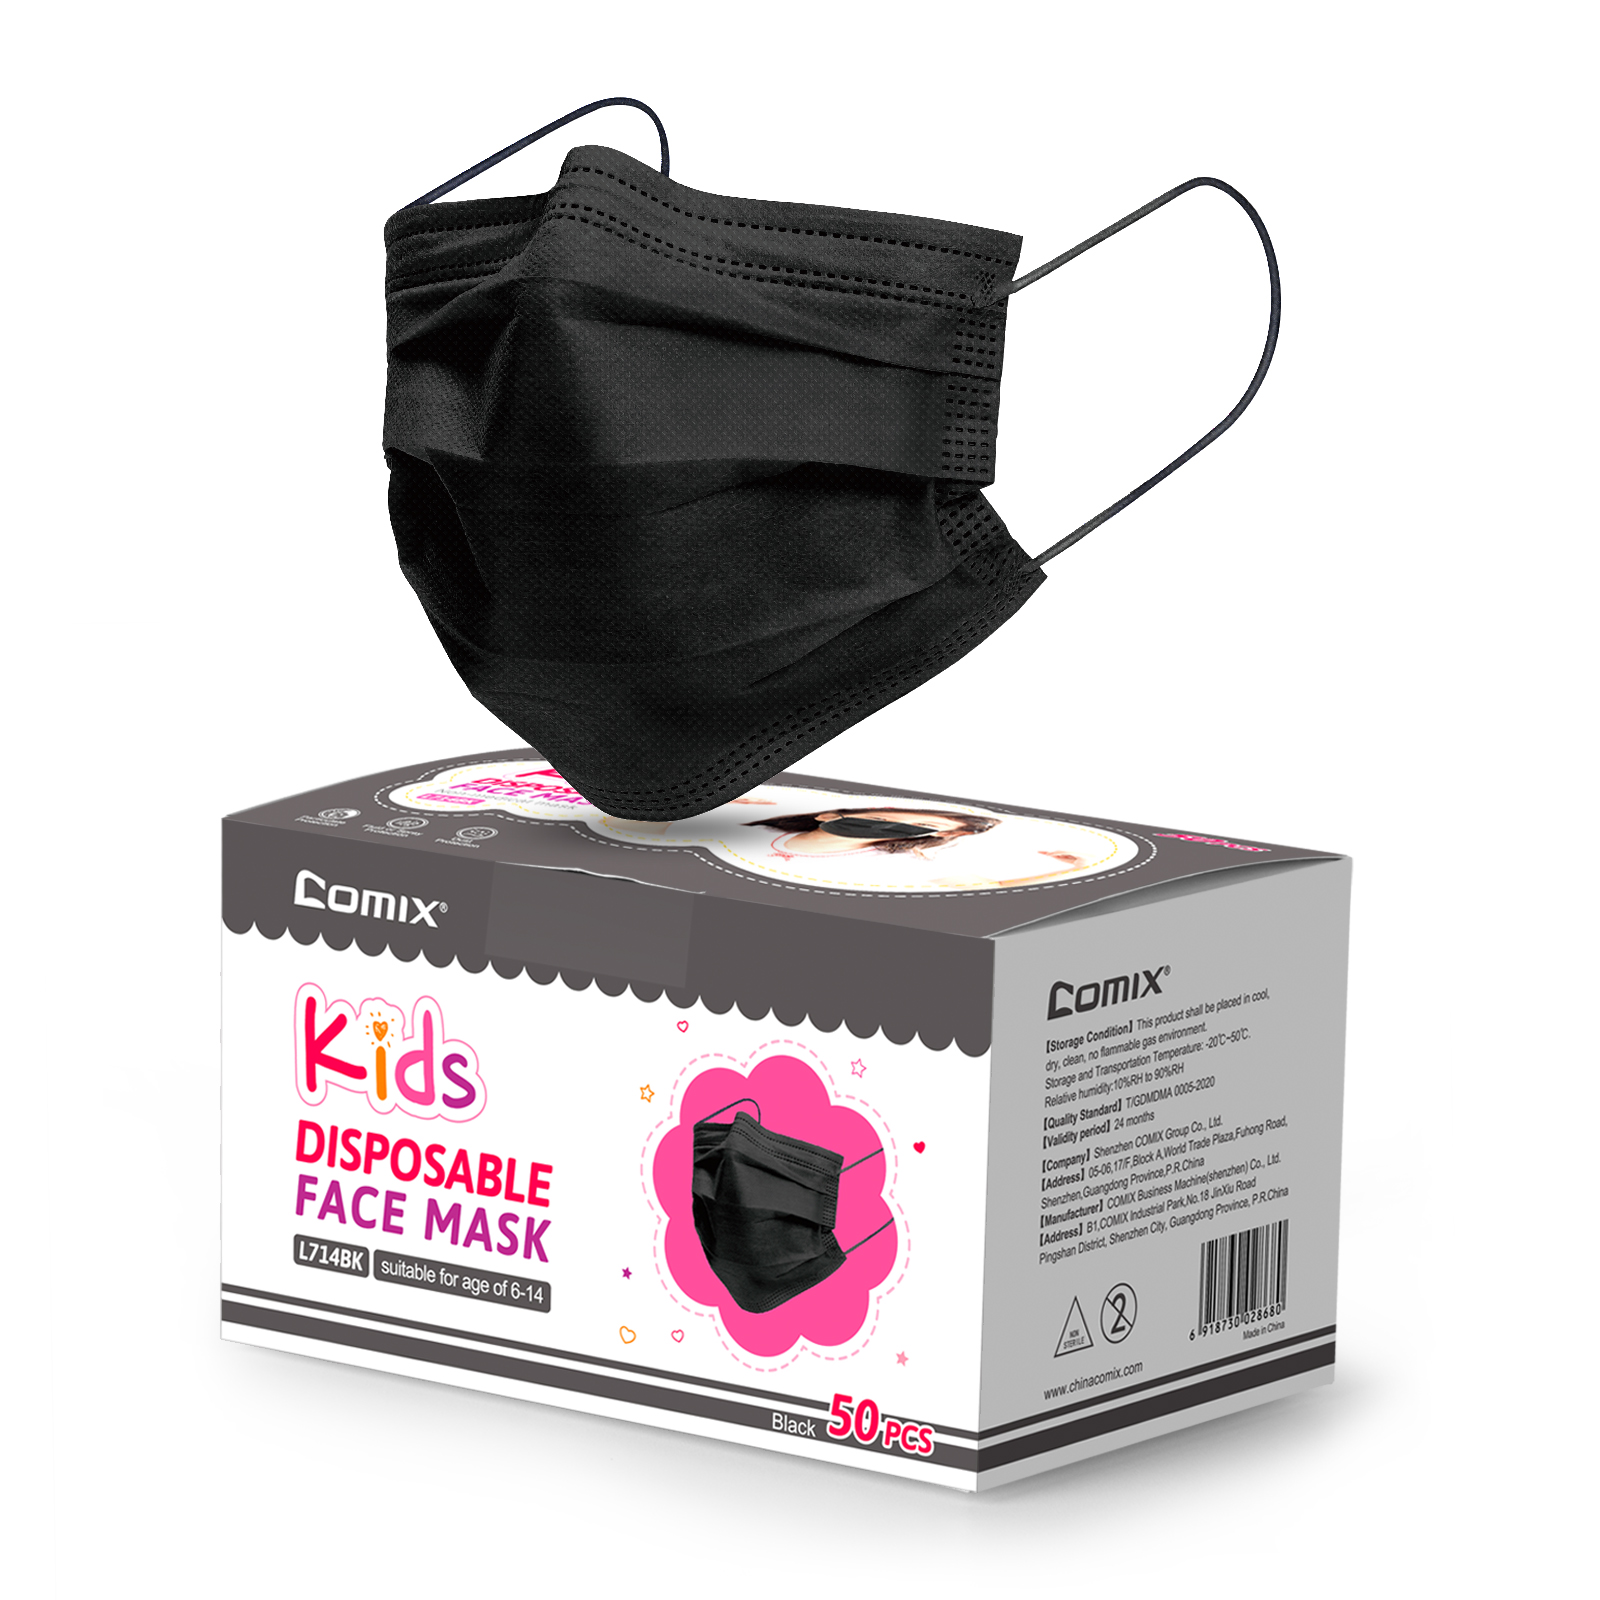 Kids Face Mask, Kids Disposable Face Mask, Comix Face Mask for Kids Boys Girls, 3 layer face mask, Pack of 50, Black